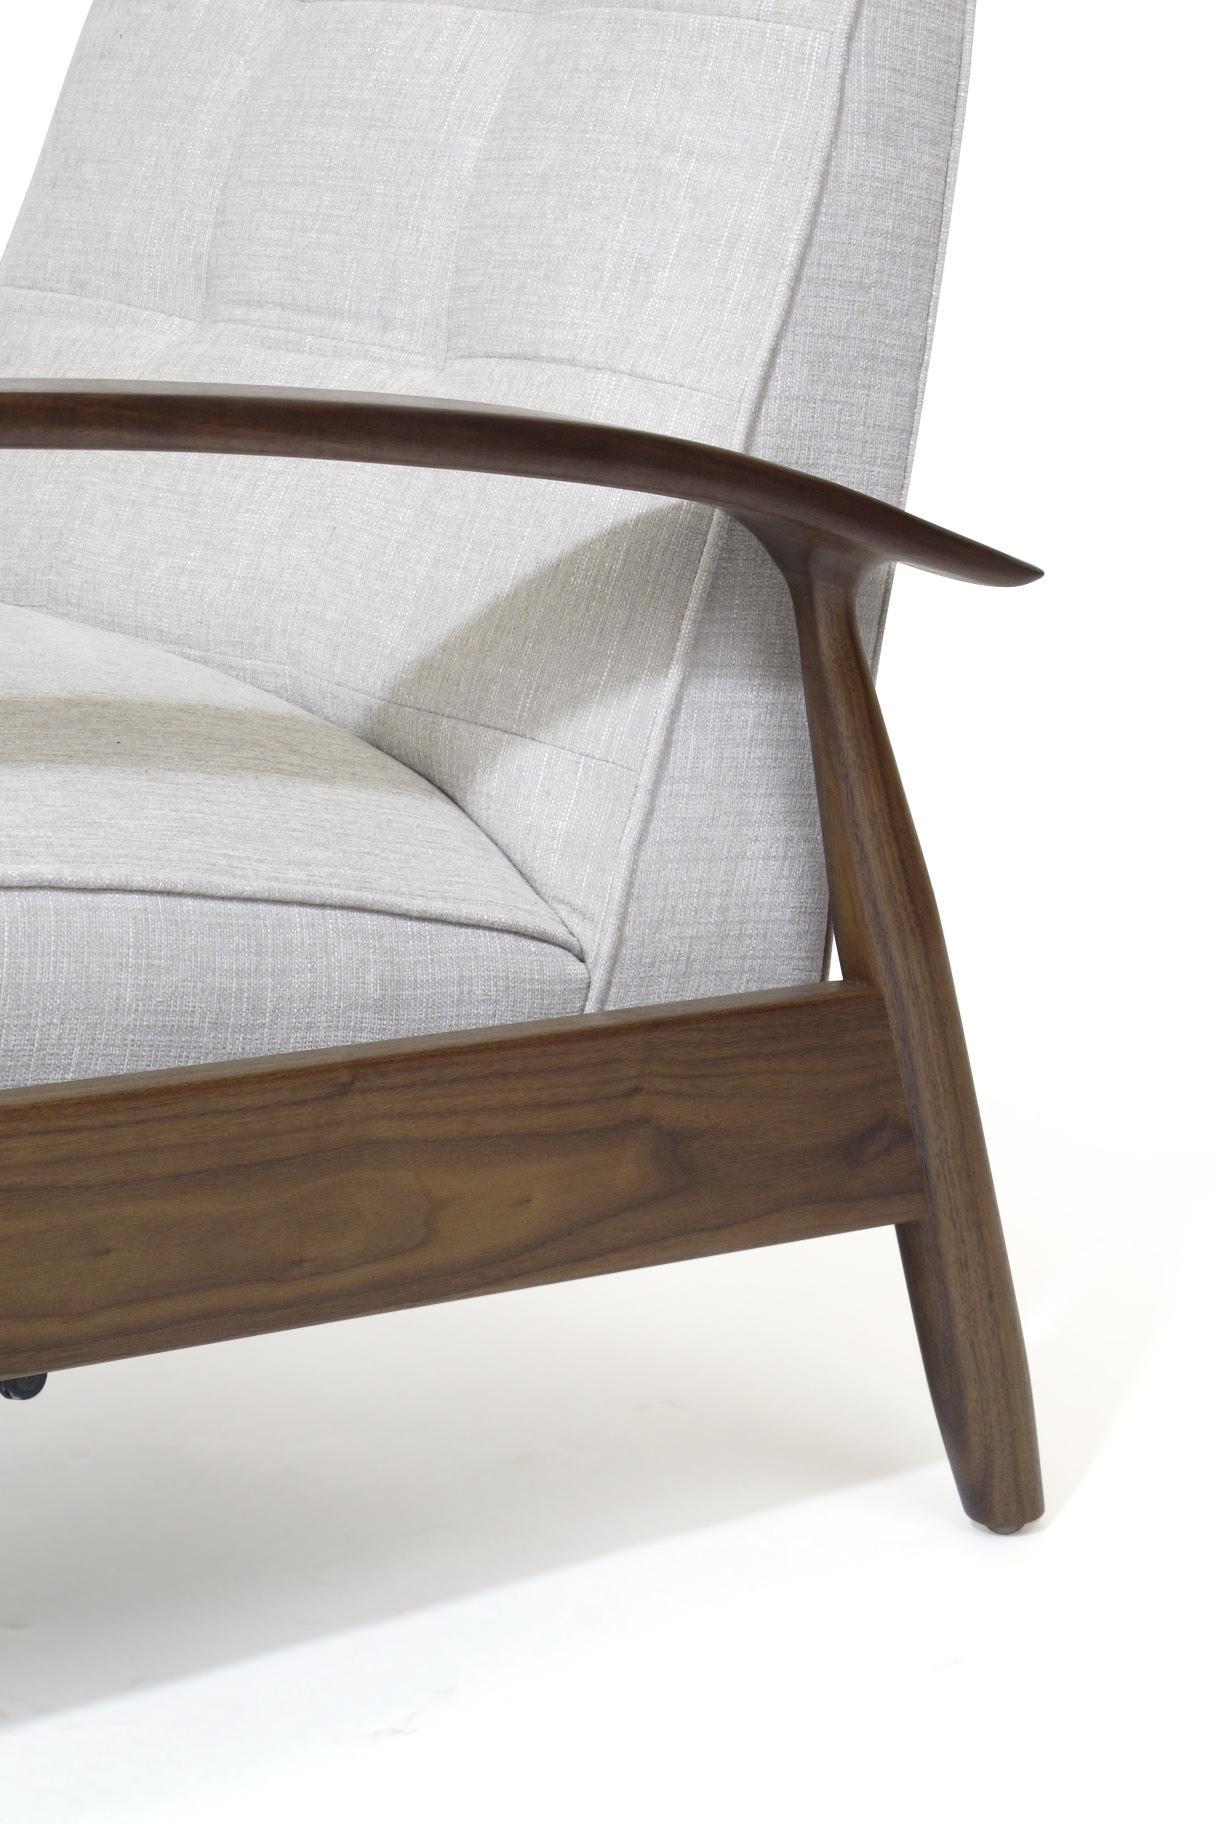 20th Century Milo Baughman for Thayer Coggin Recliner Lounge Chair